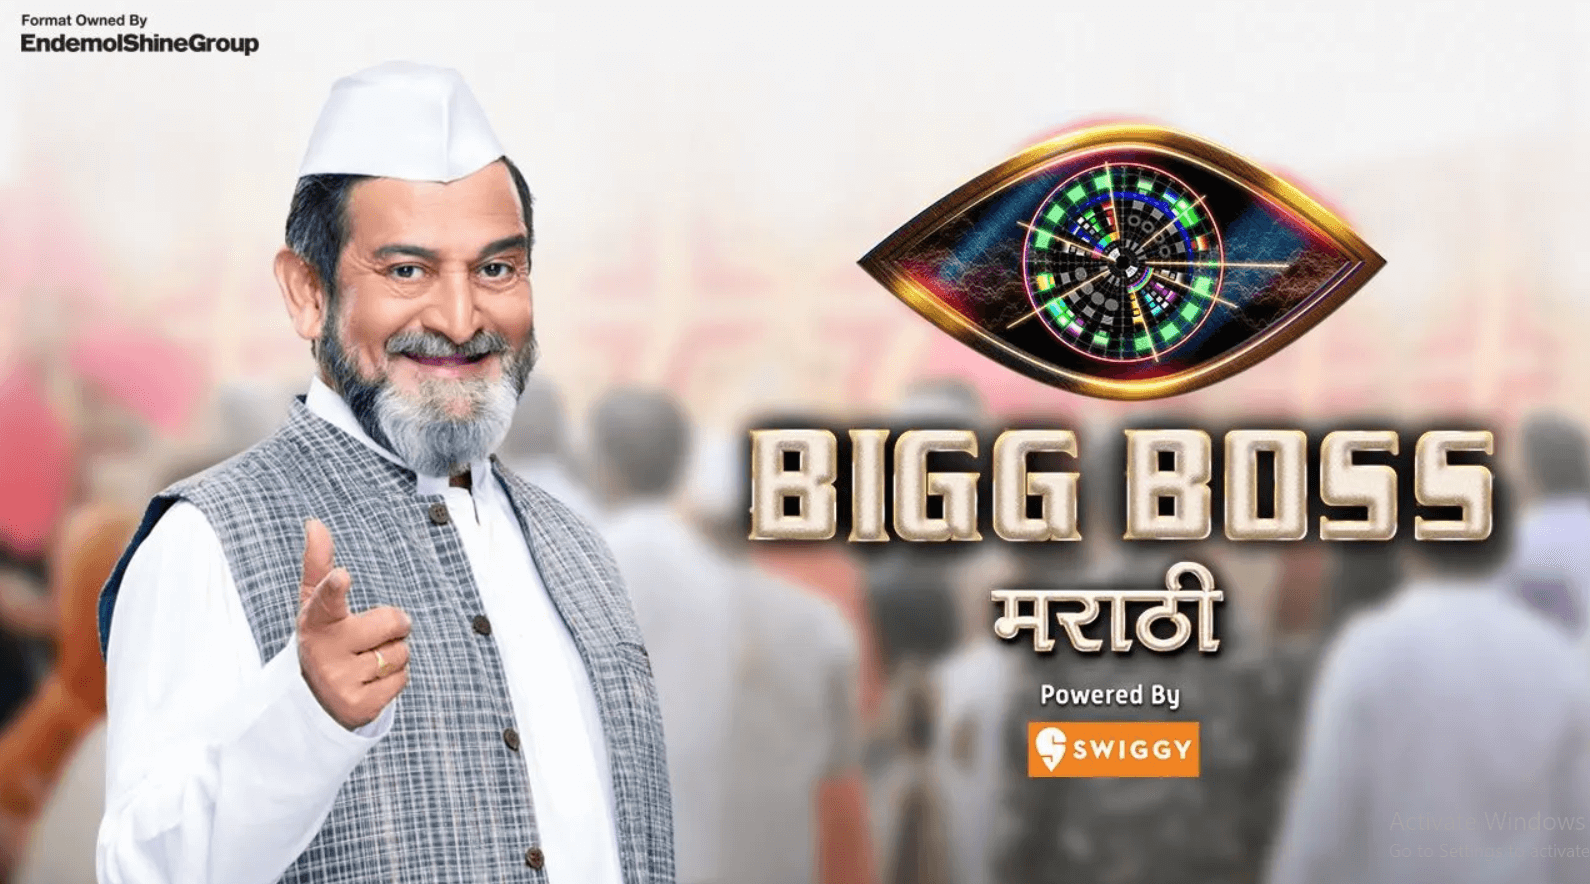 bigg boss marathi 2 full episodes